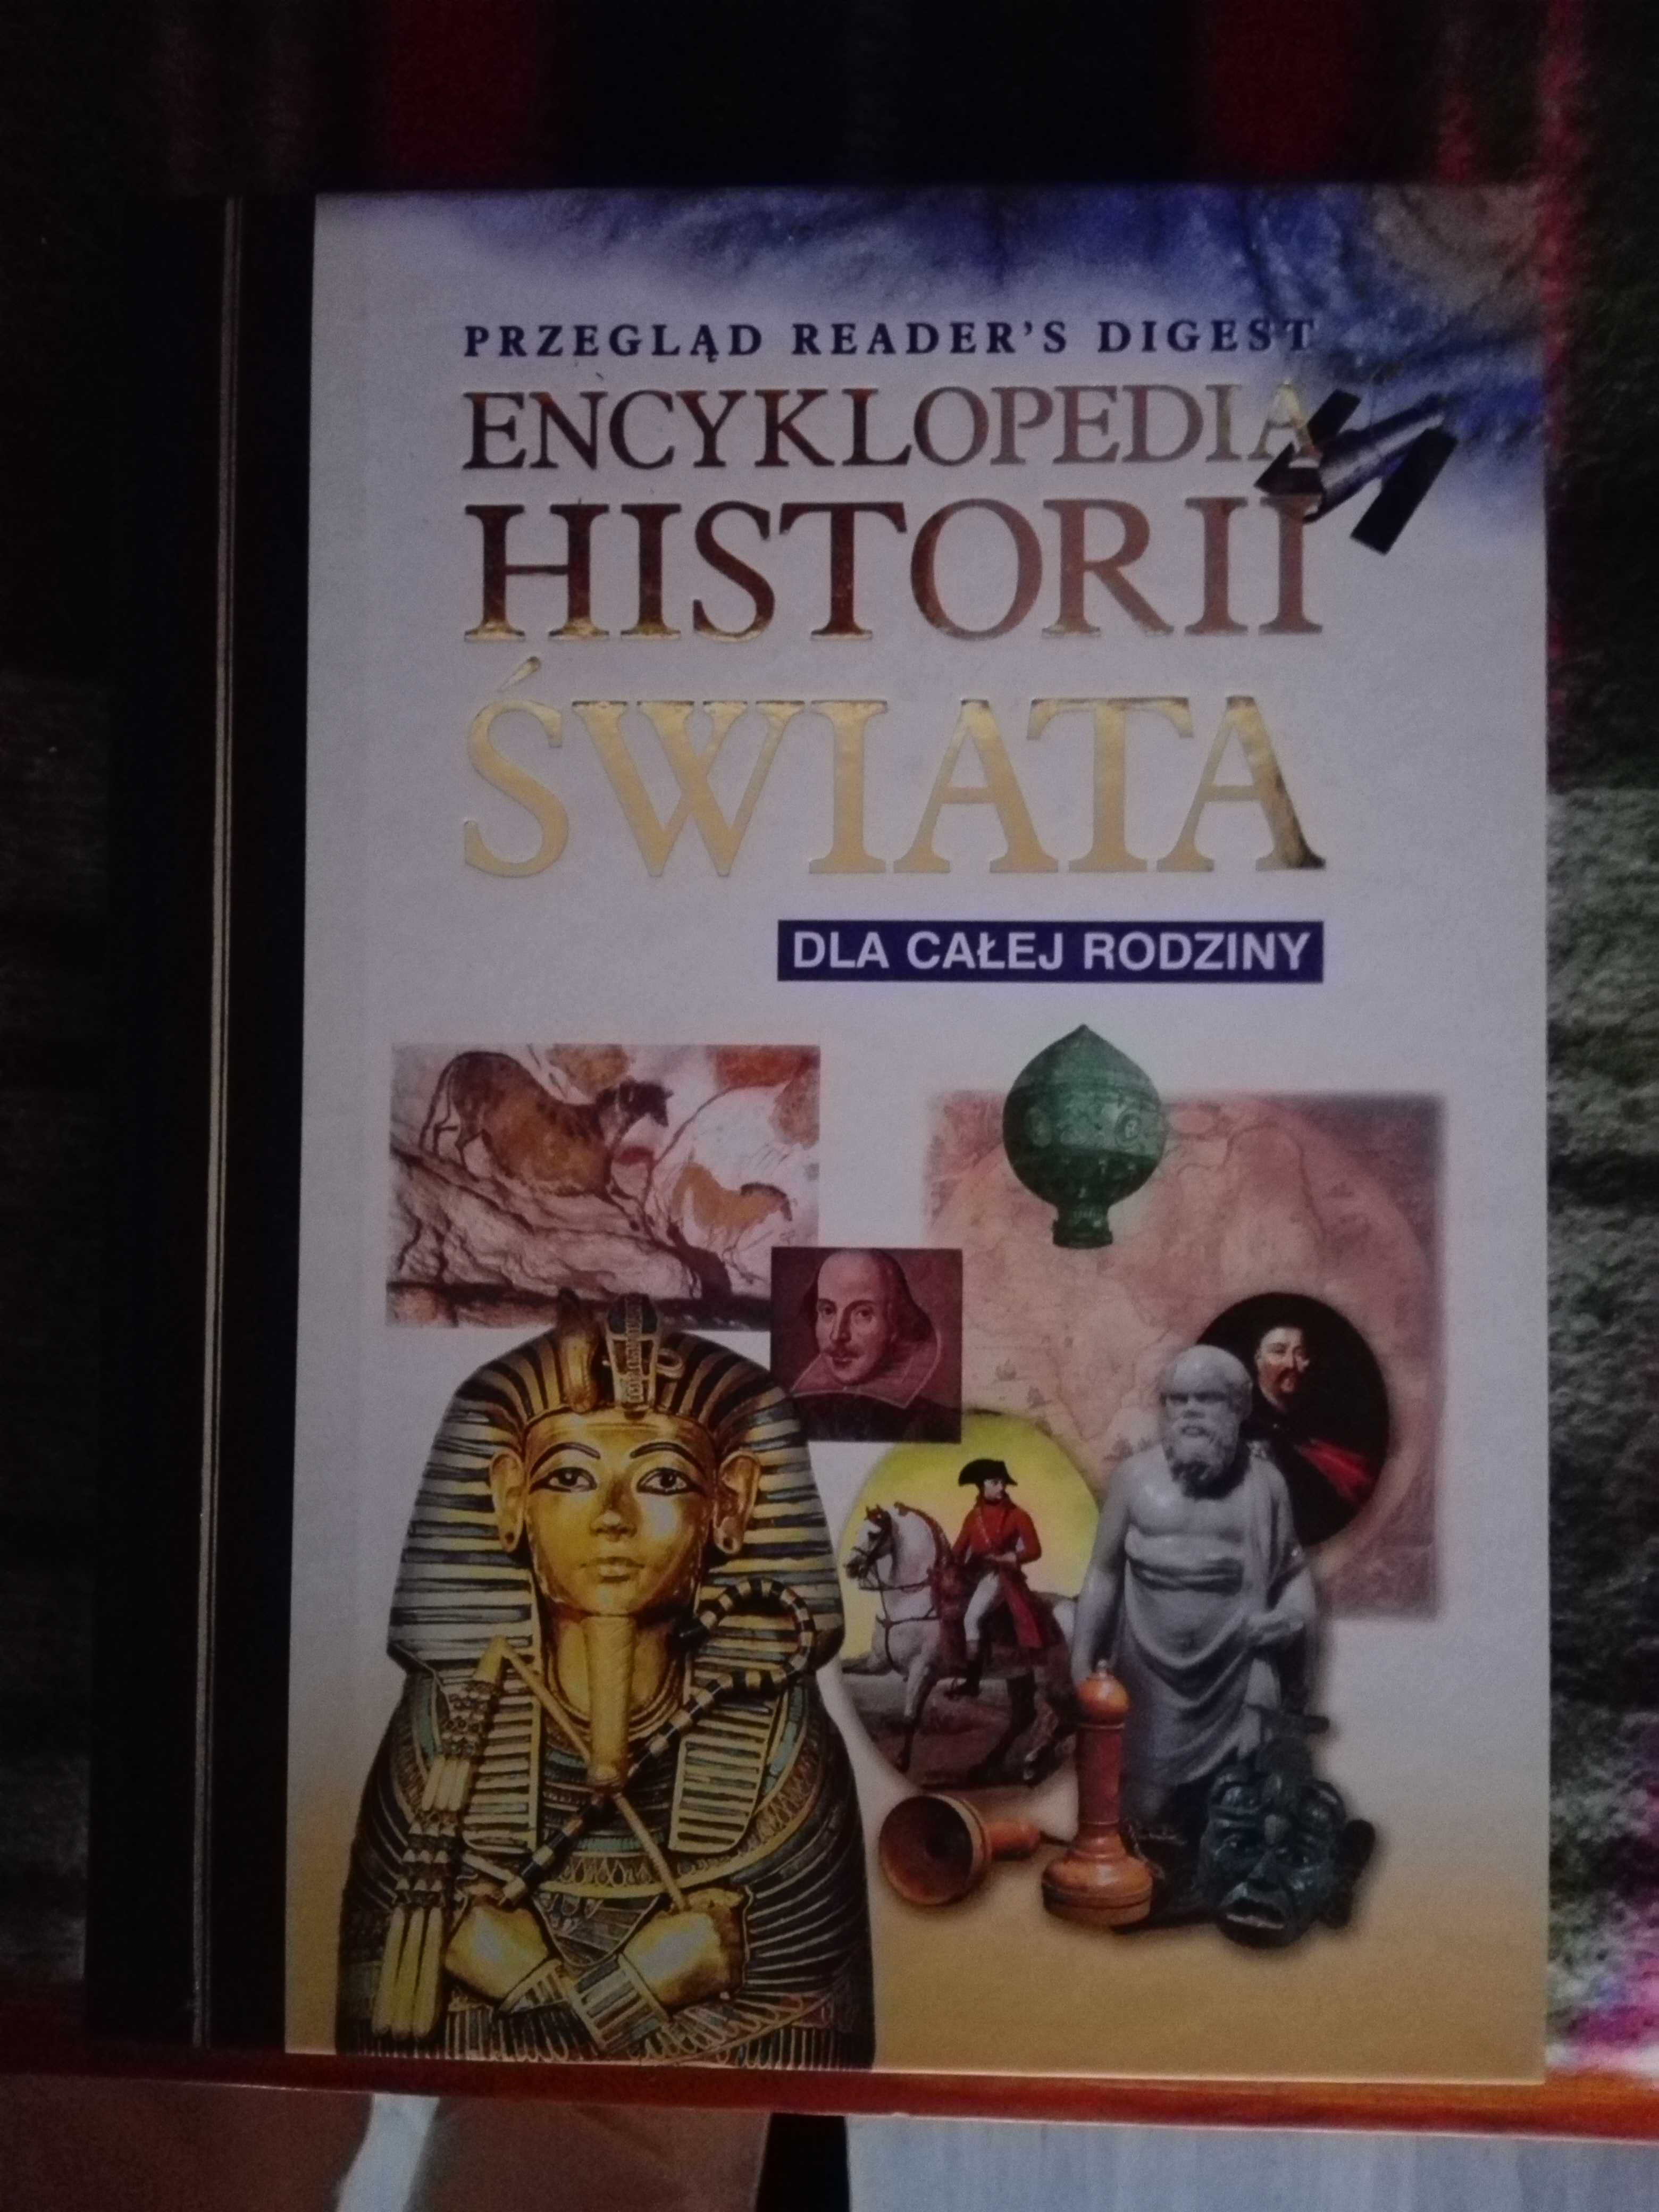 Encyklopedia historii świata